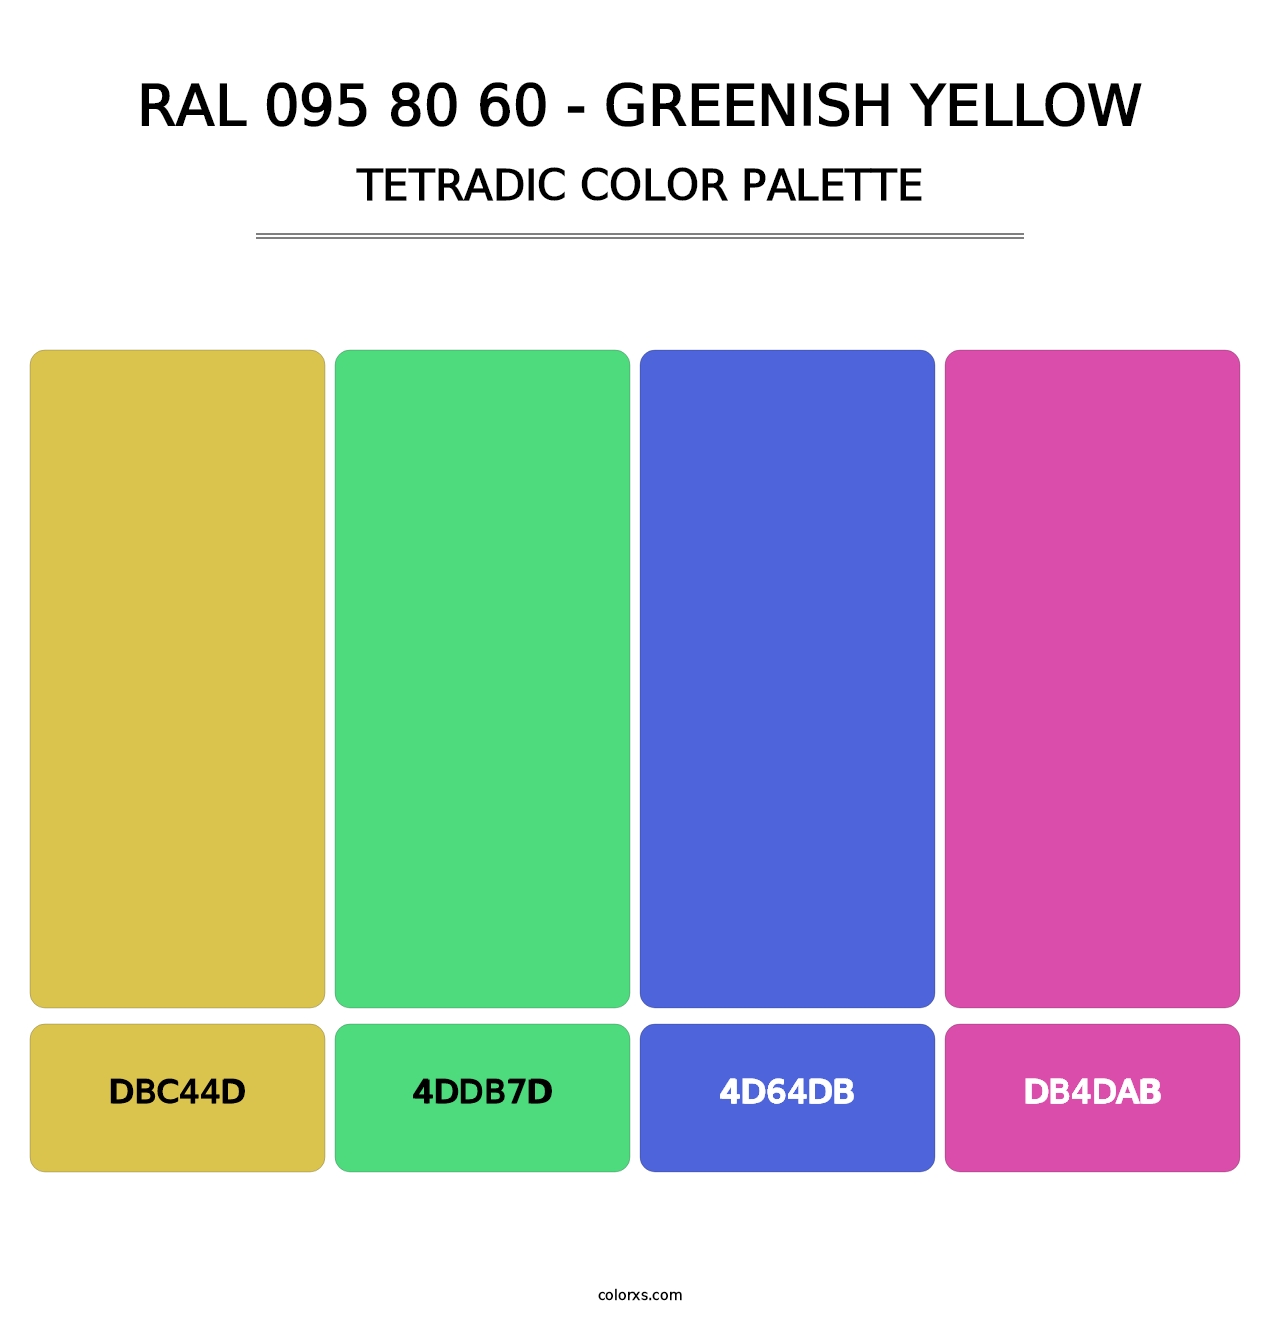 RAL 095 80 60 - Greenish Yellow - Tetradic Color Palette